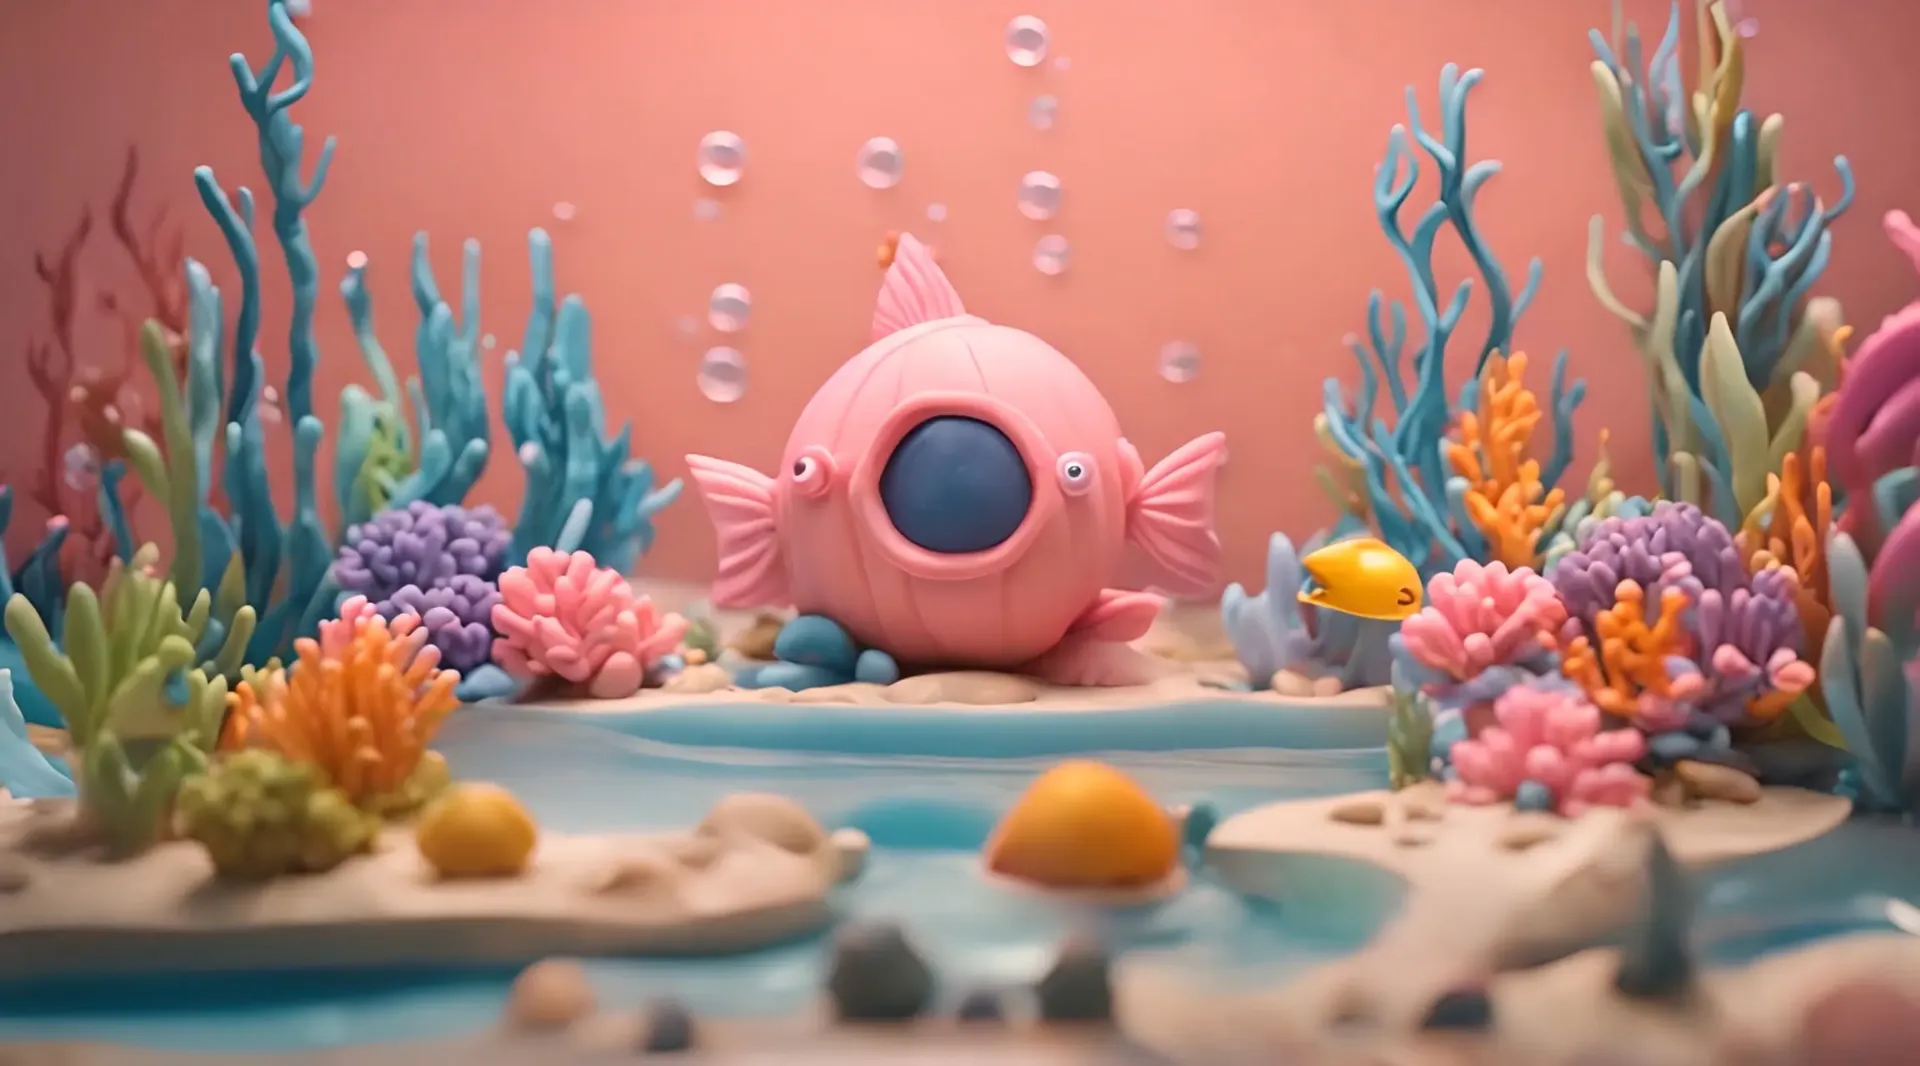 Underwater Fantasy World 3D Cartoon Video Backdrop